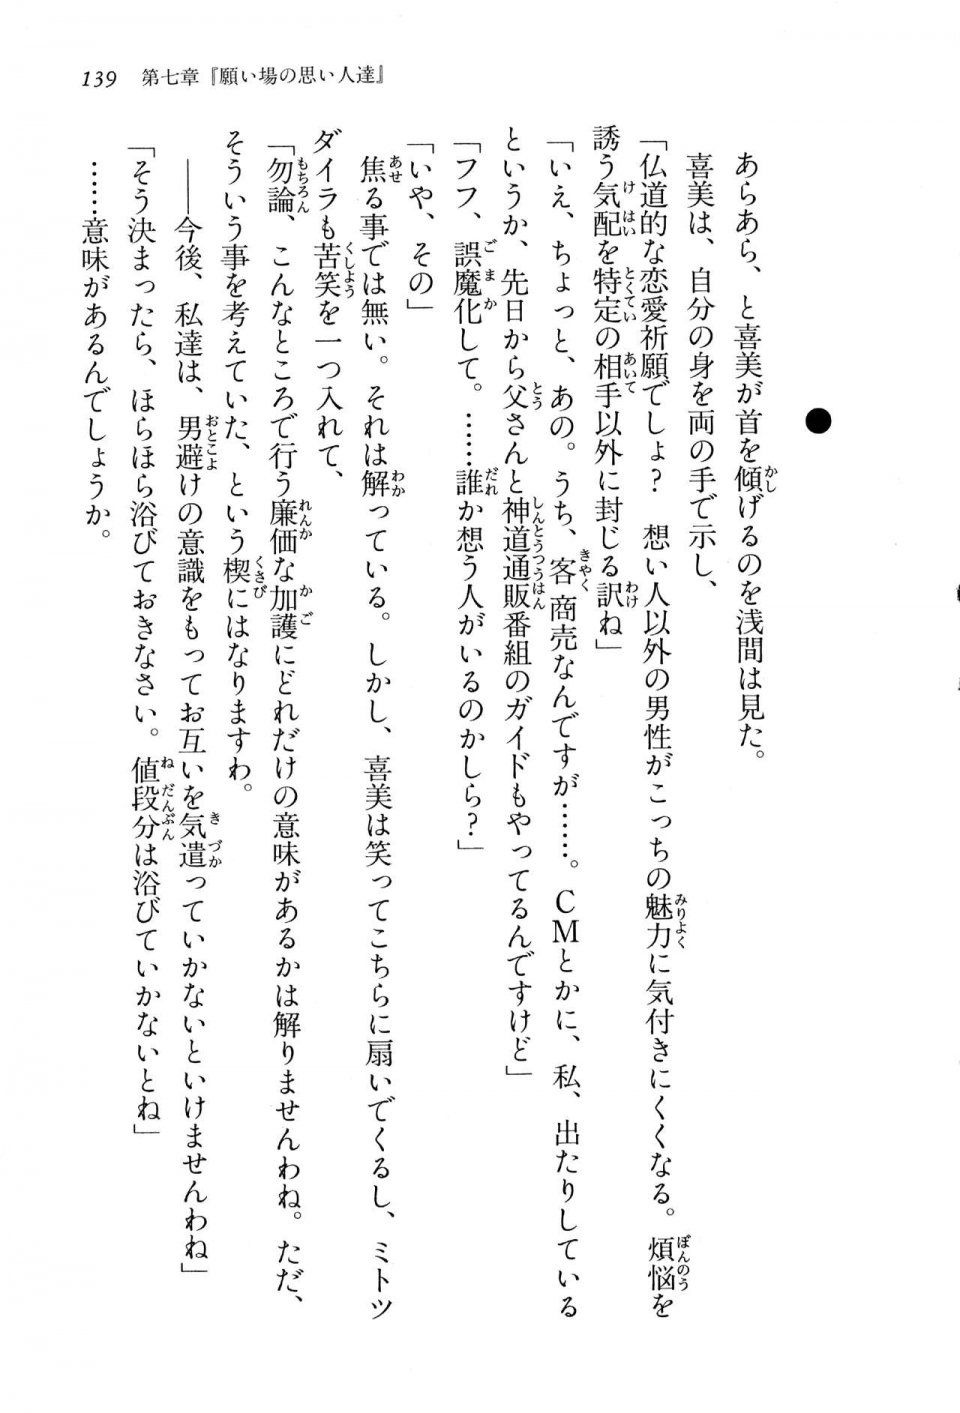 Kyoukai Senjou no Horizon BD Special Mininovel Vol 2(1B) - Photo #143